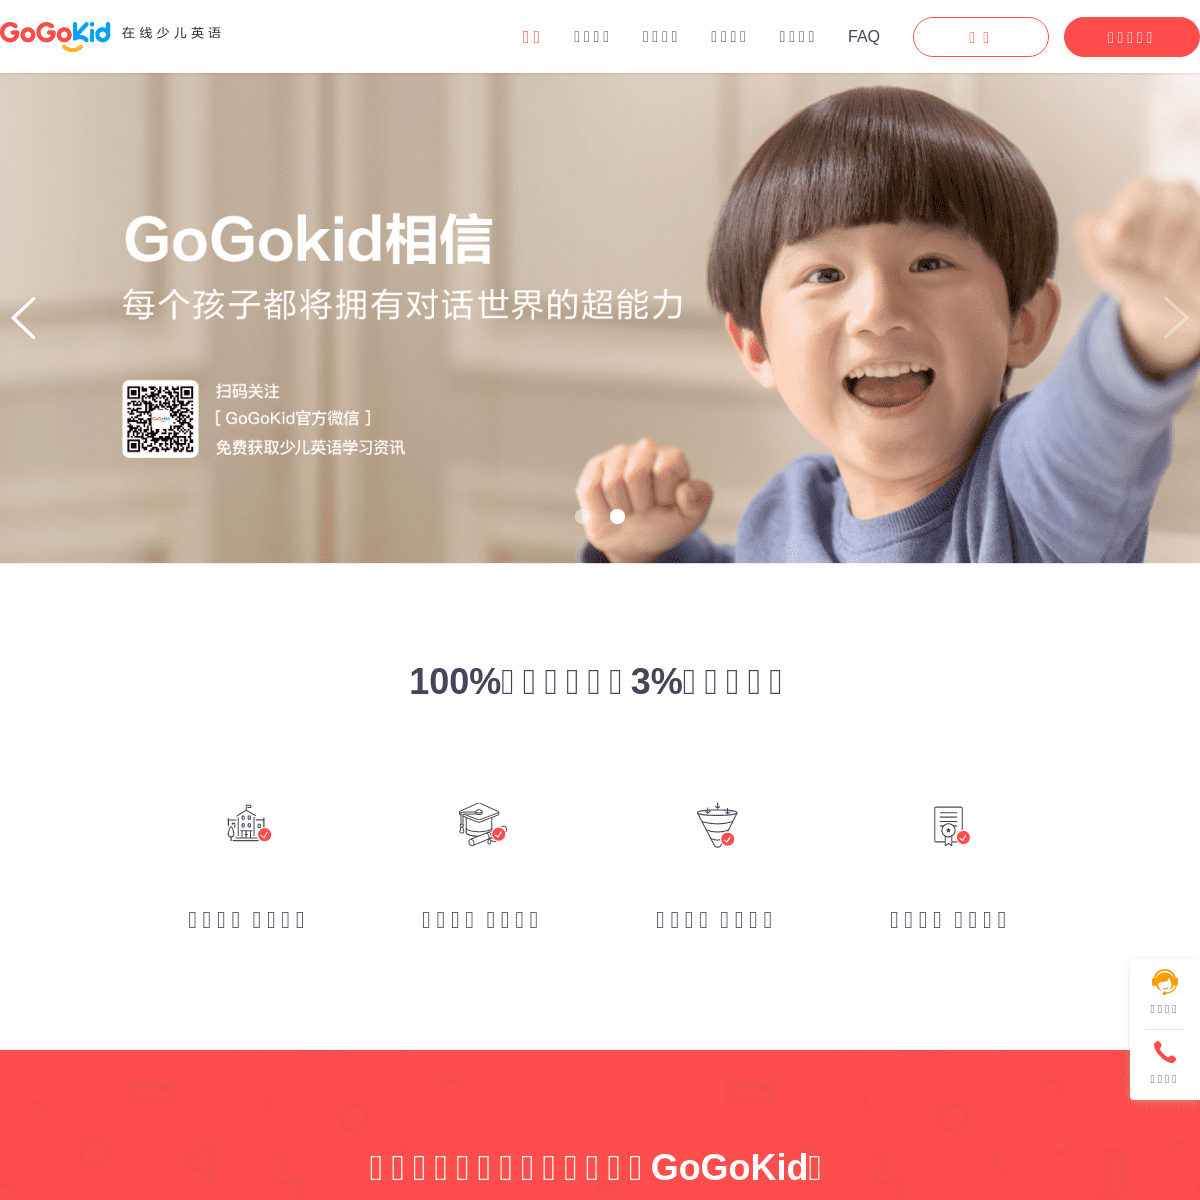 A complete backup of gogokid.com